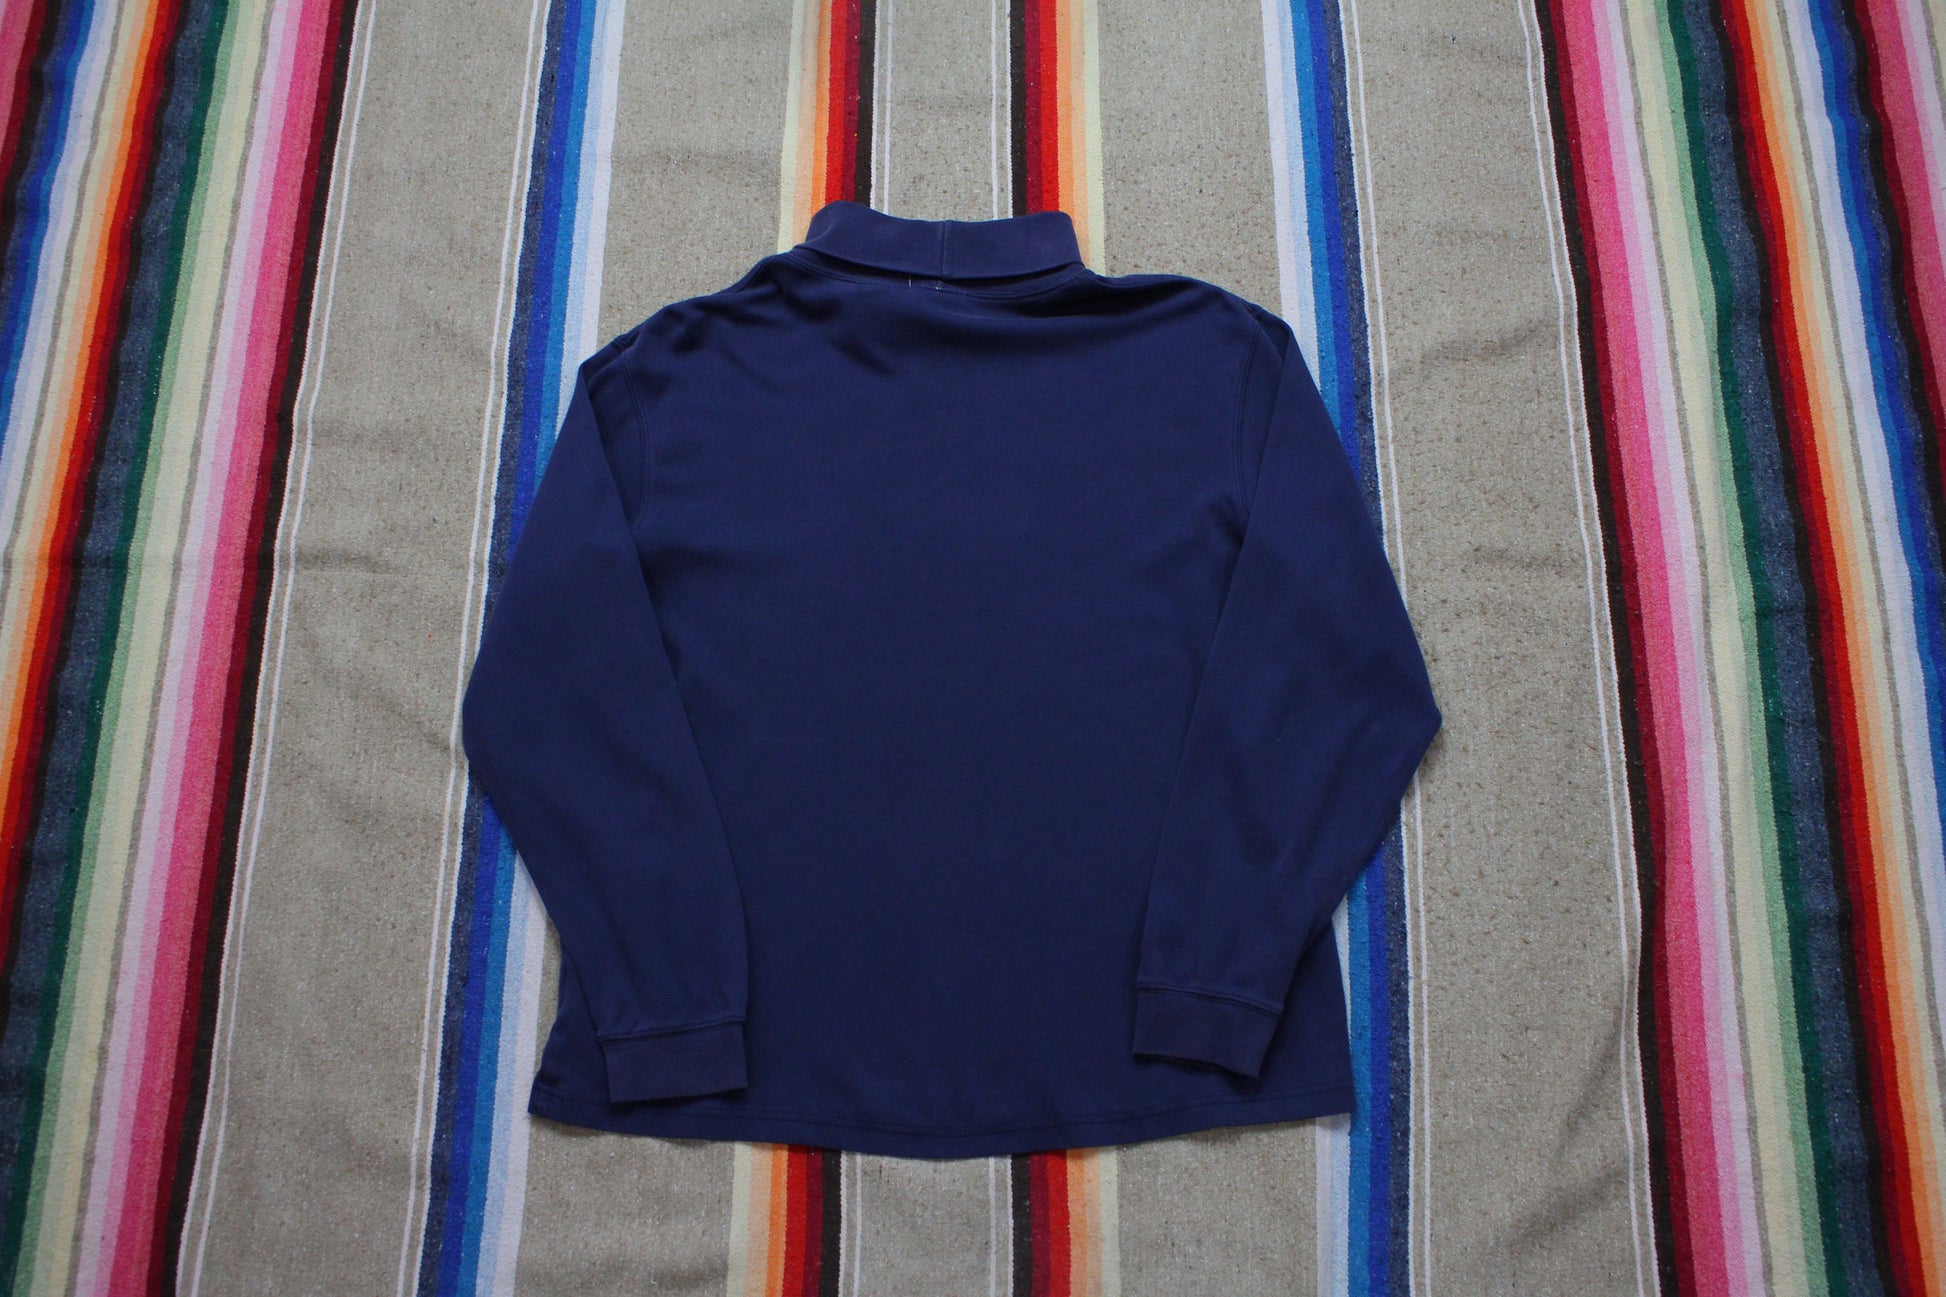 1990s/2000s St Johns Bay Blank Blue Turtleneck T-Shirt Size M